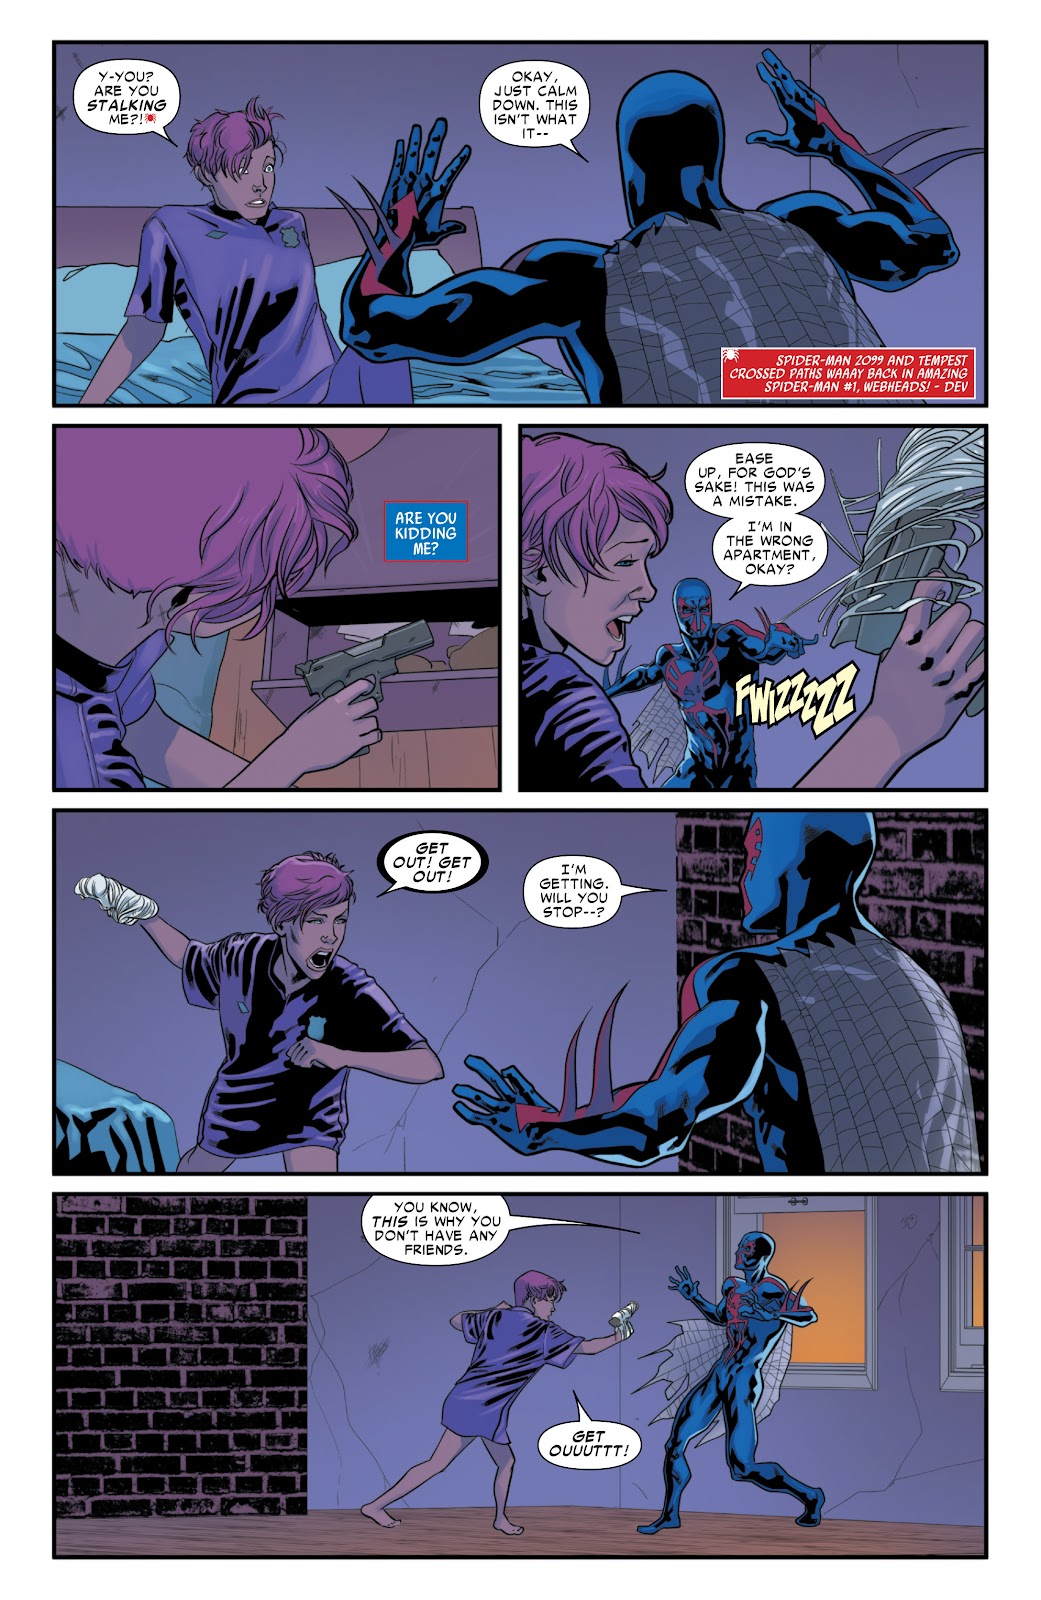 Spider-Man 2099 (2014) issue 11 - Page 6